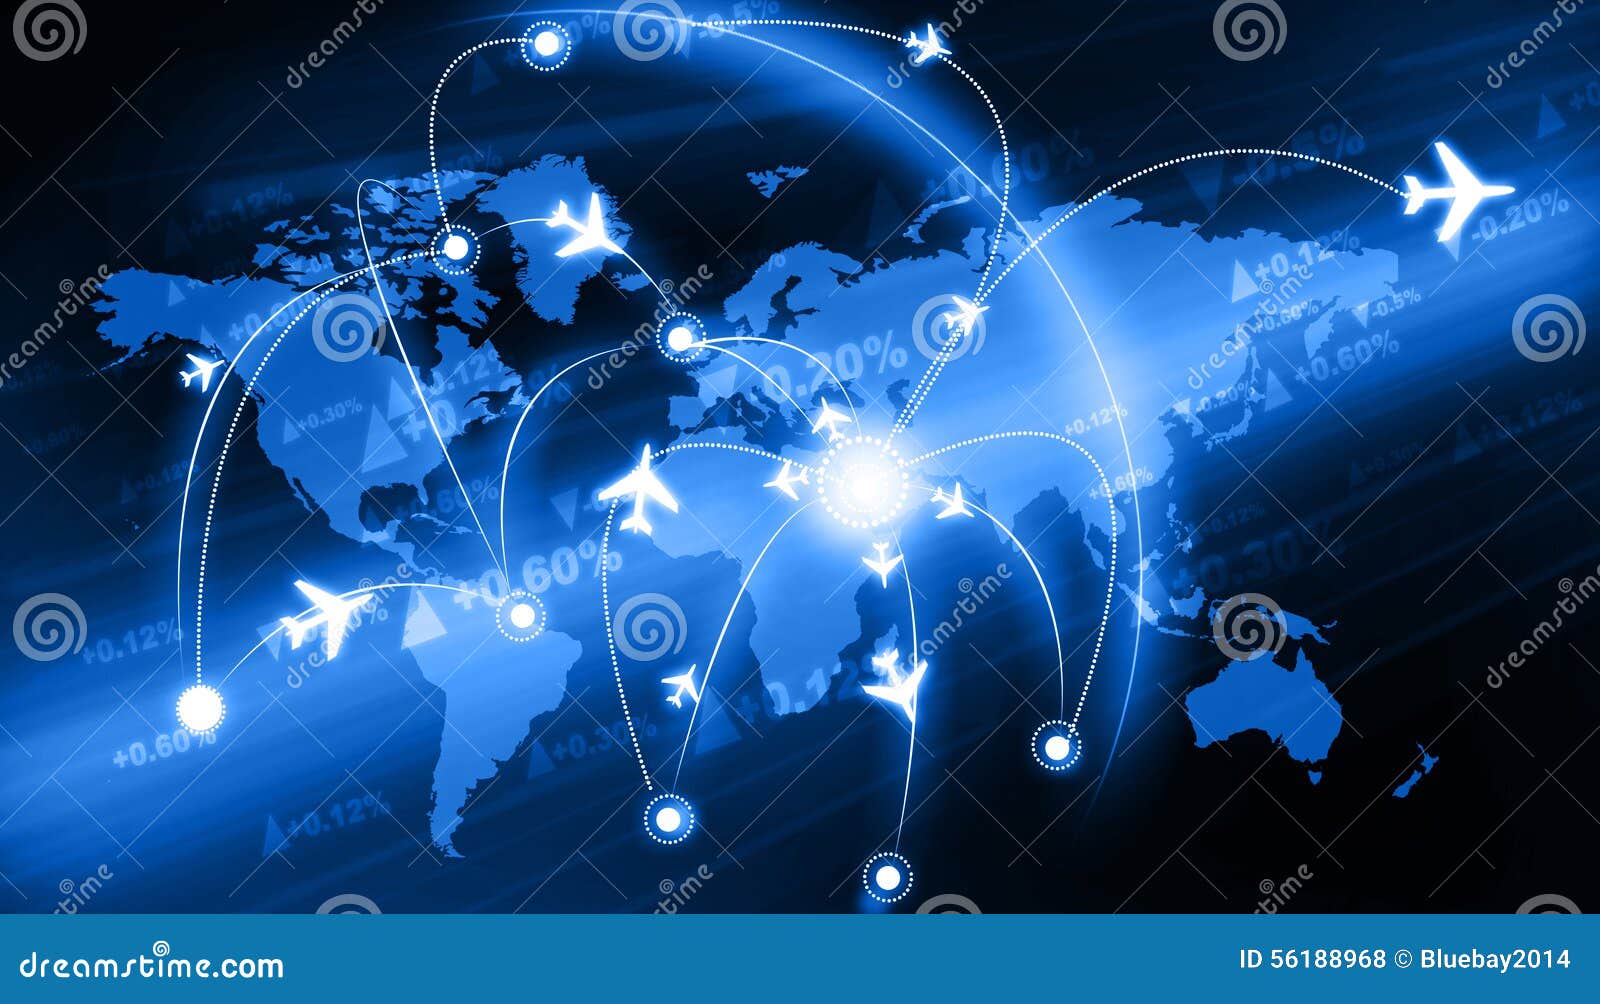 travel info network